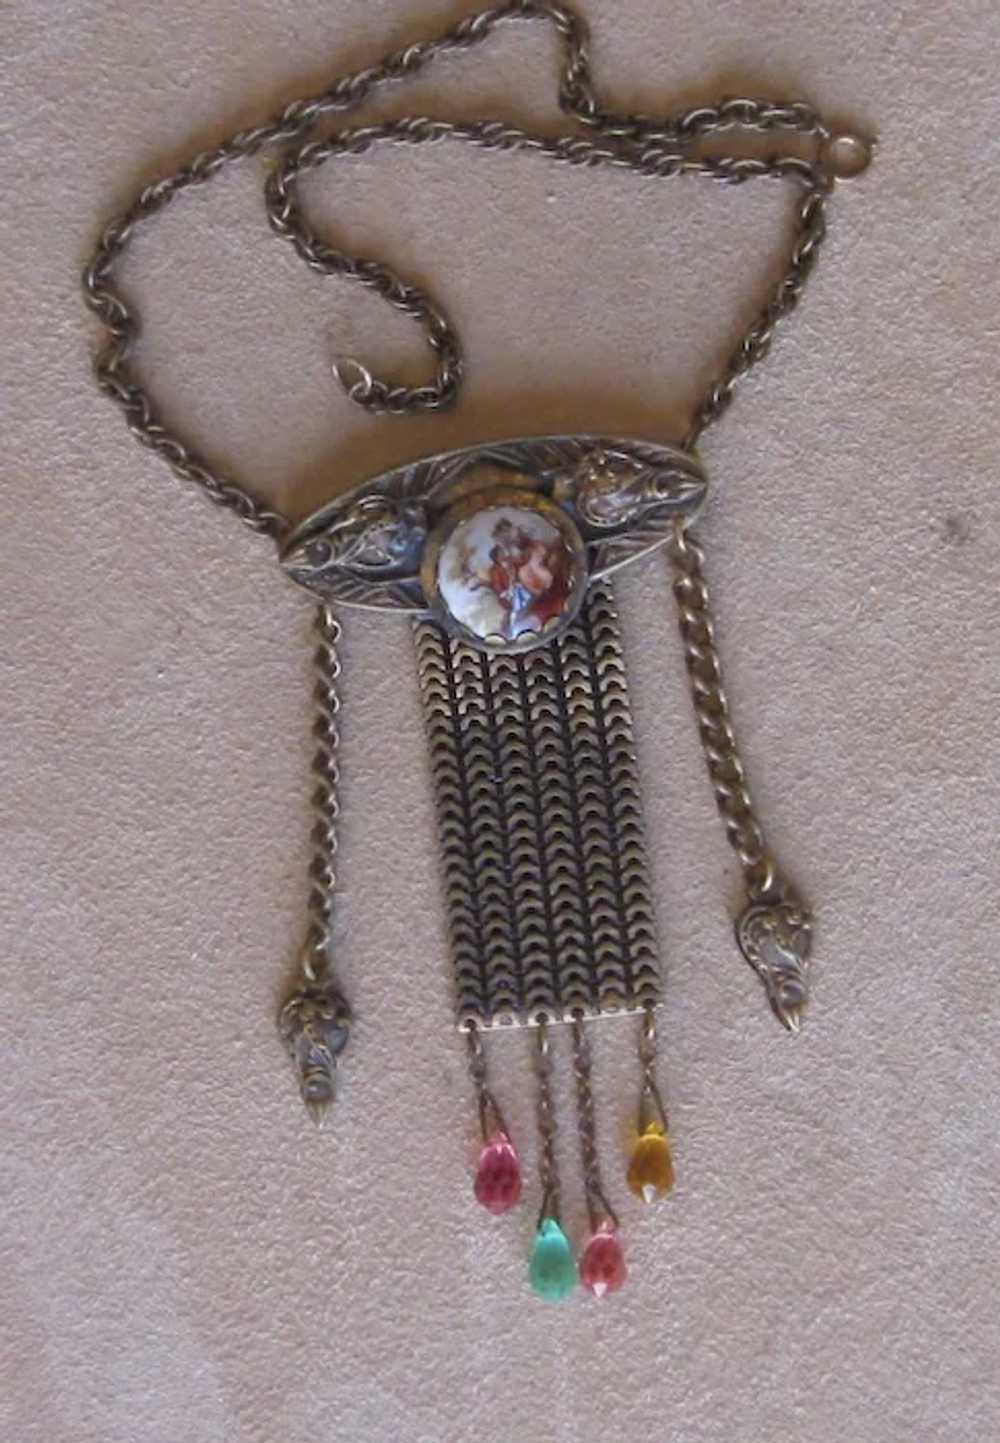 Pomerantz- Rare Signed Vintage Necklace - image 6